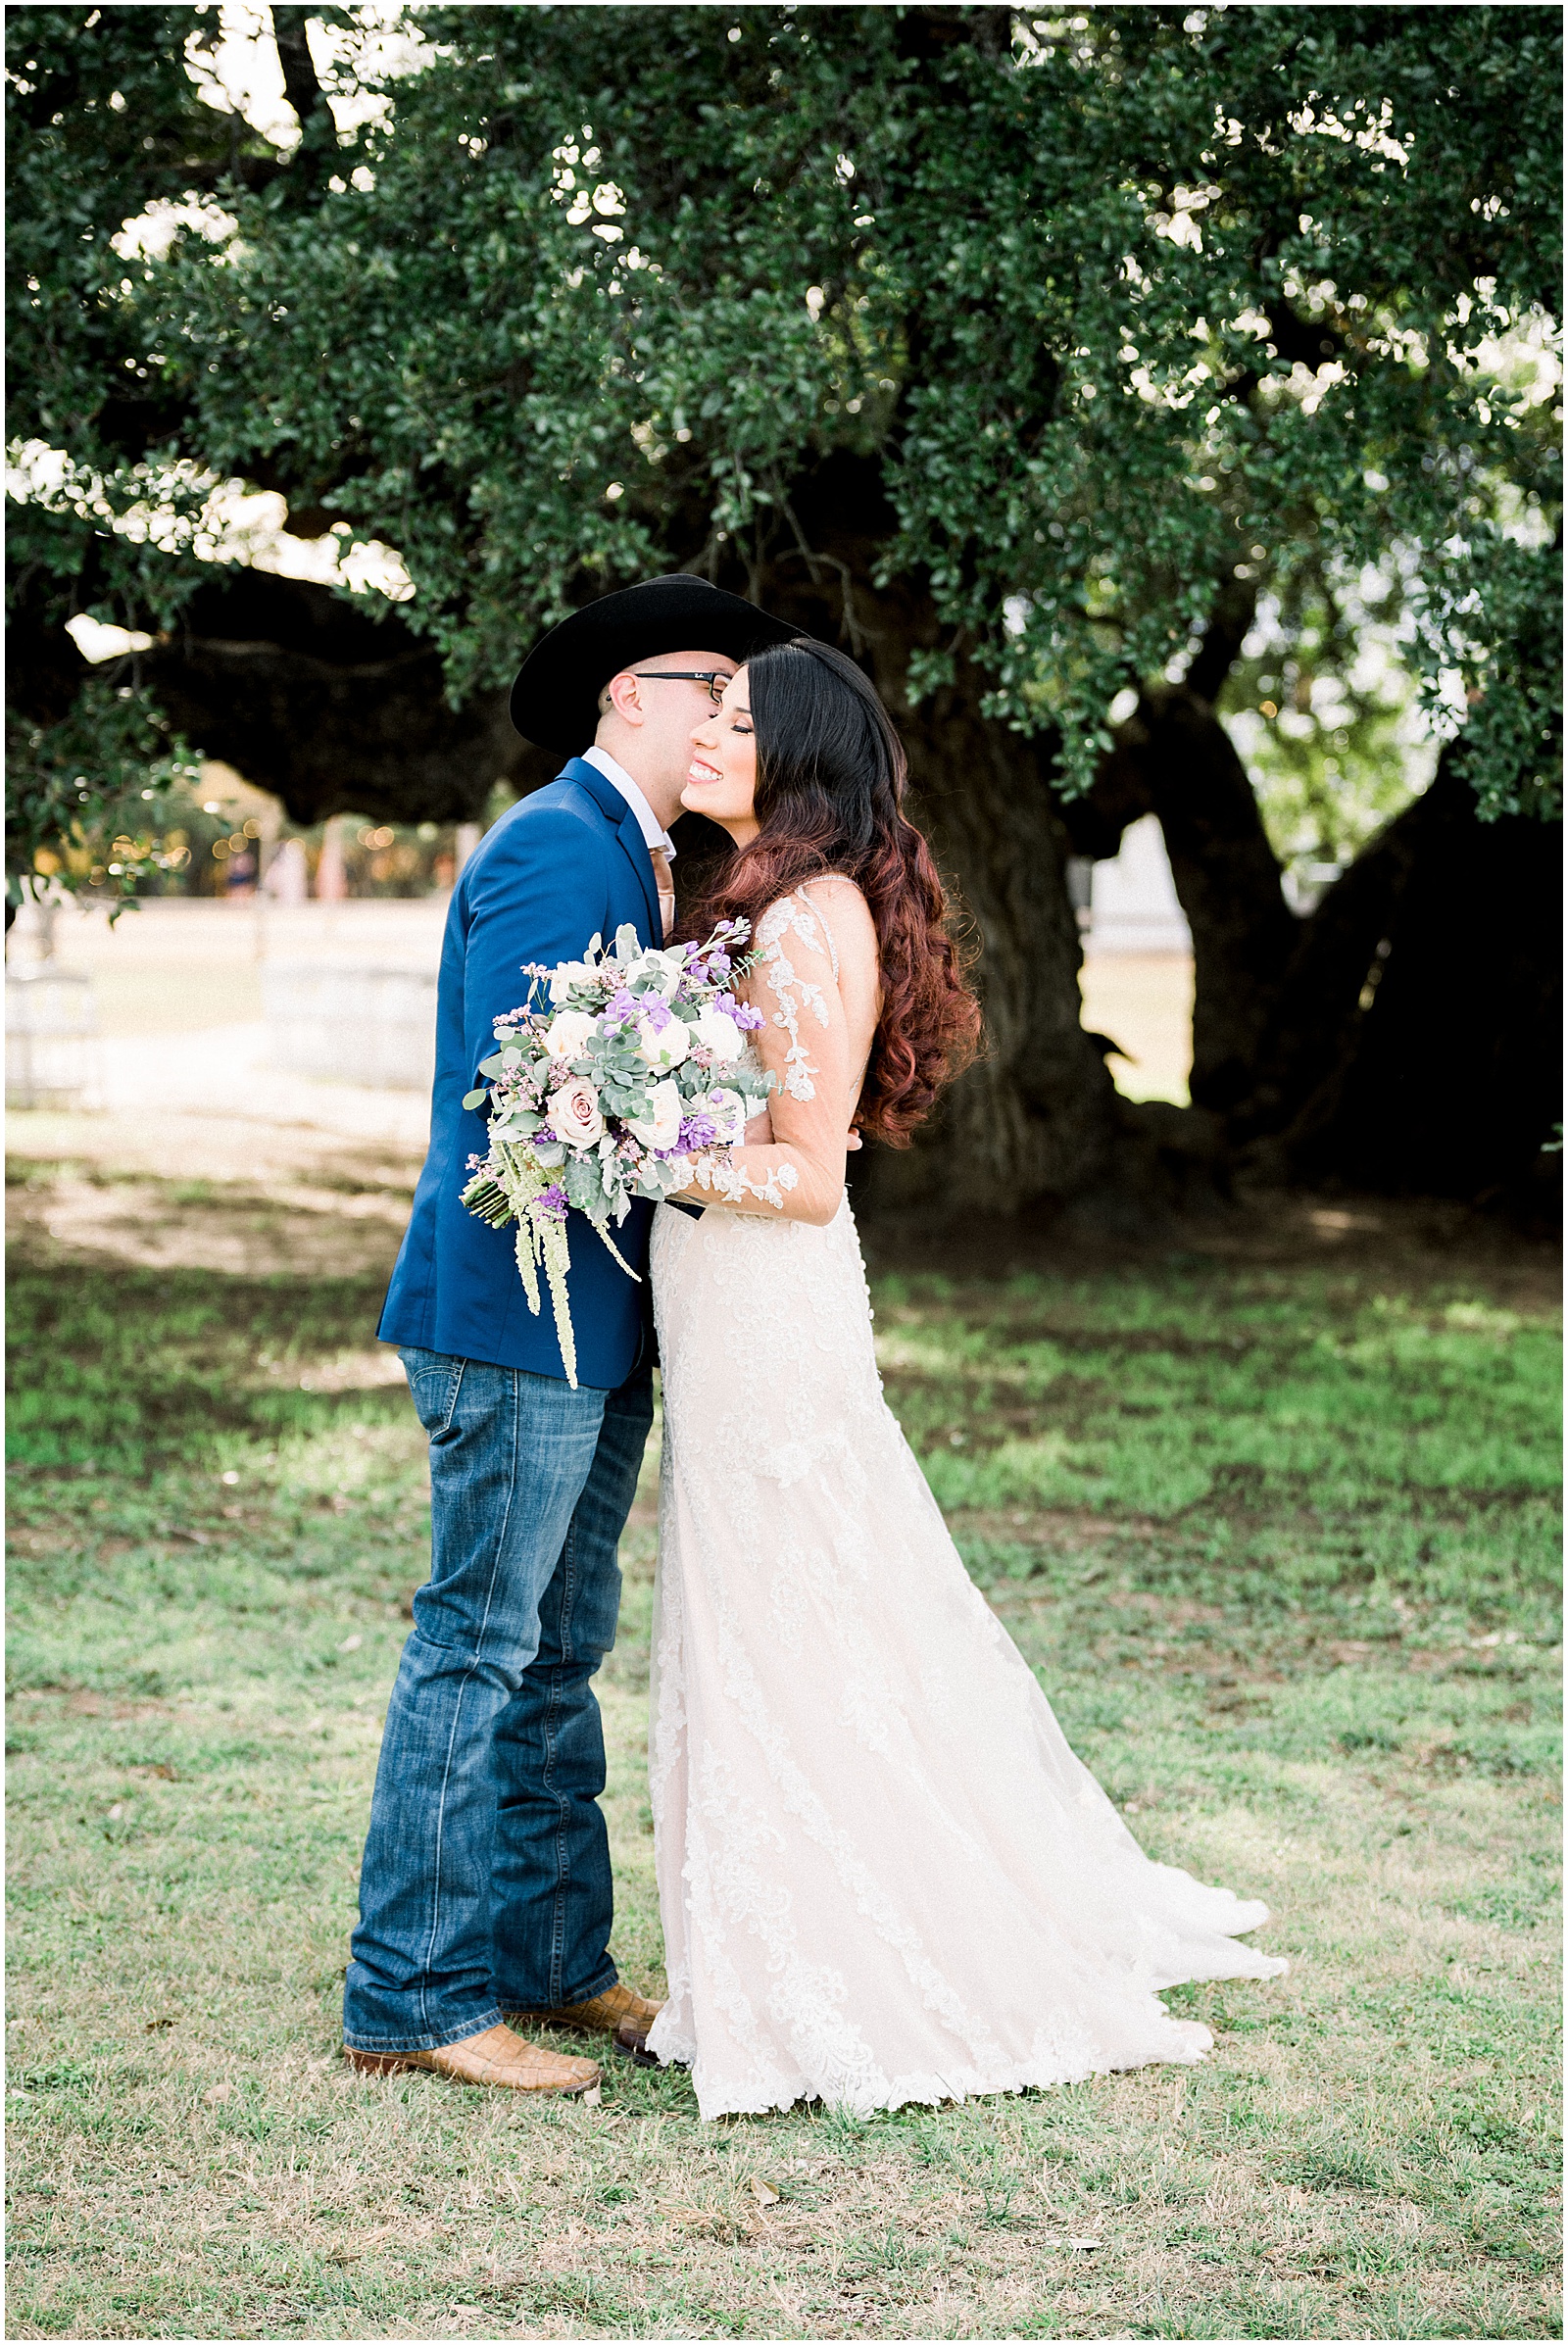 Wedding at Five oaks Farm